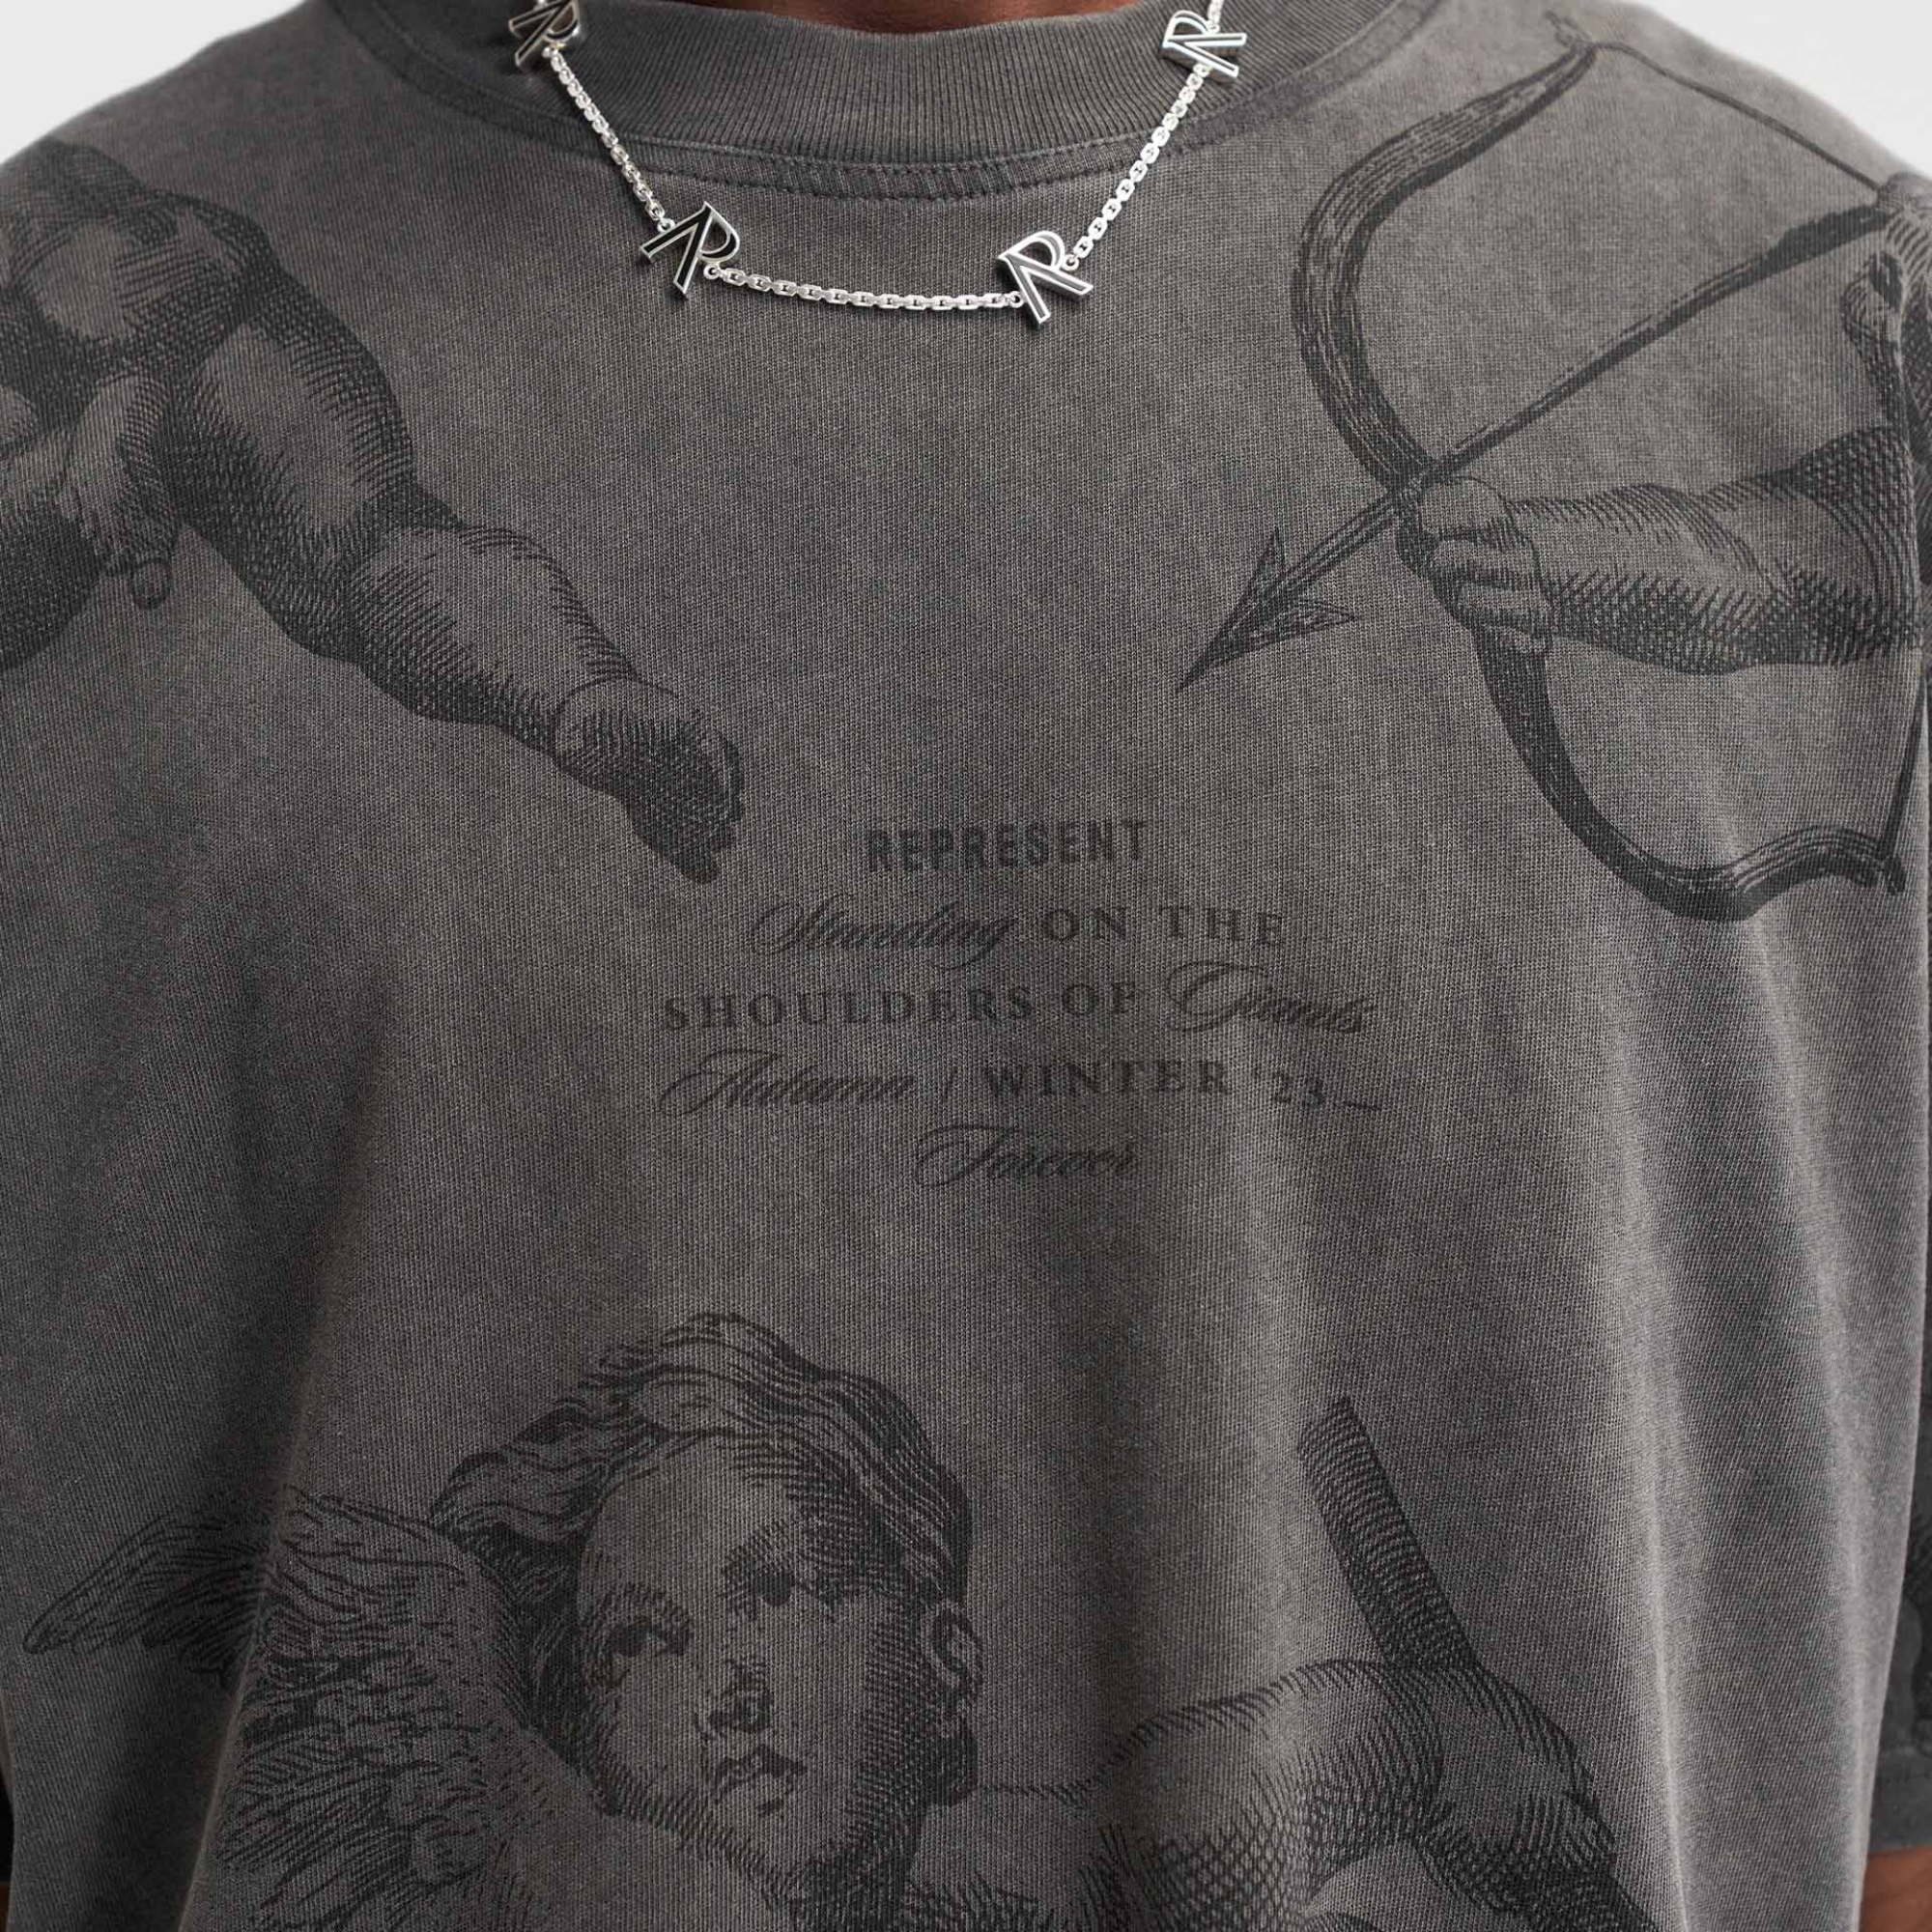 Represent Vintage Grey Cherub All Over T-Shirt